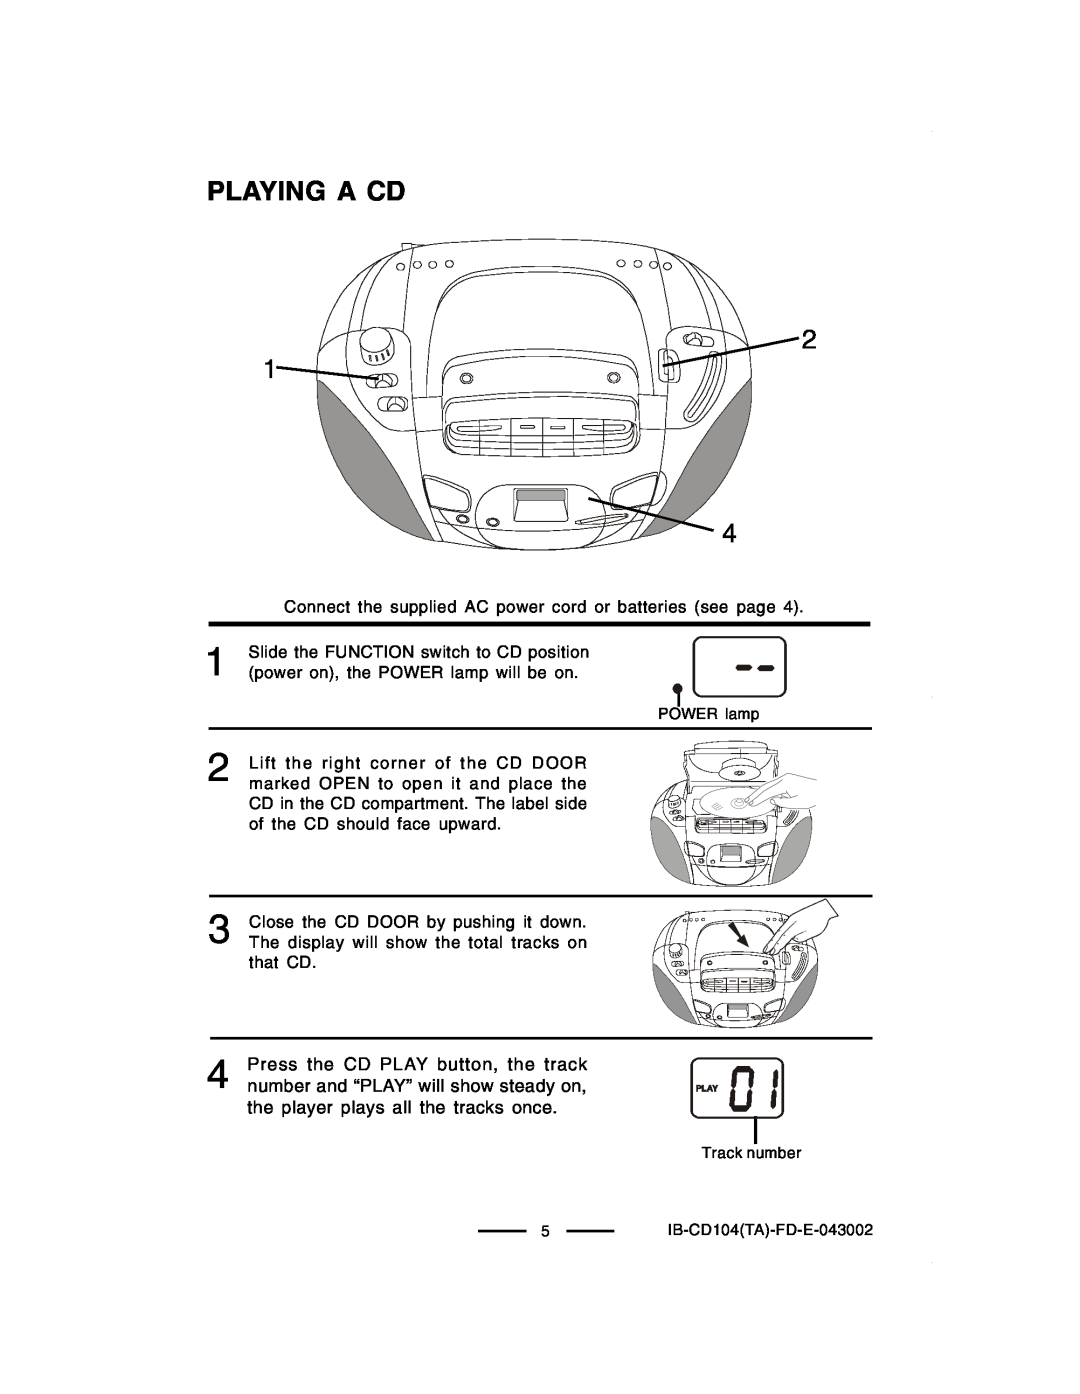 Lenoxx Electronics CD-104 manual Playing A Cd, POWER lamp, Track number 5IB-CD104TA-FD-E-043002 